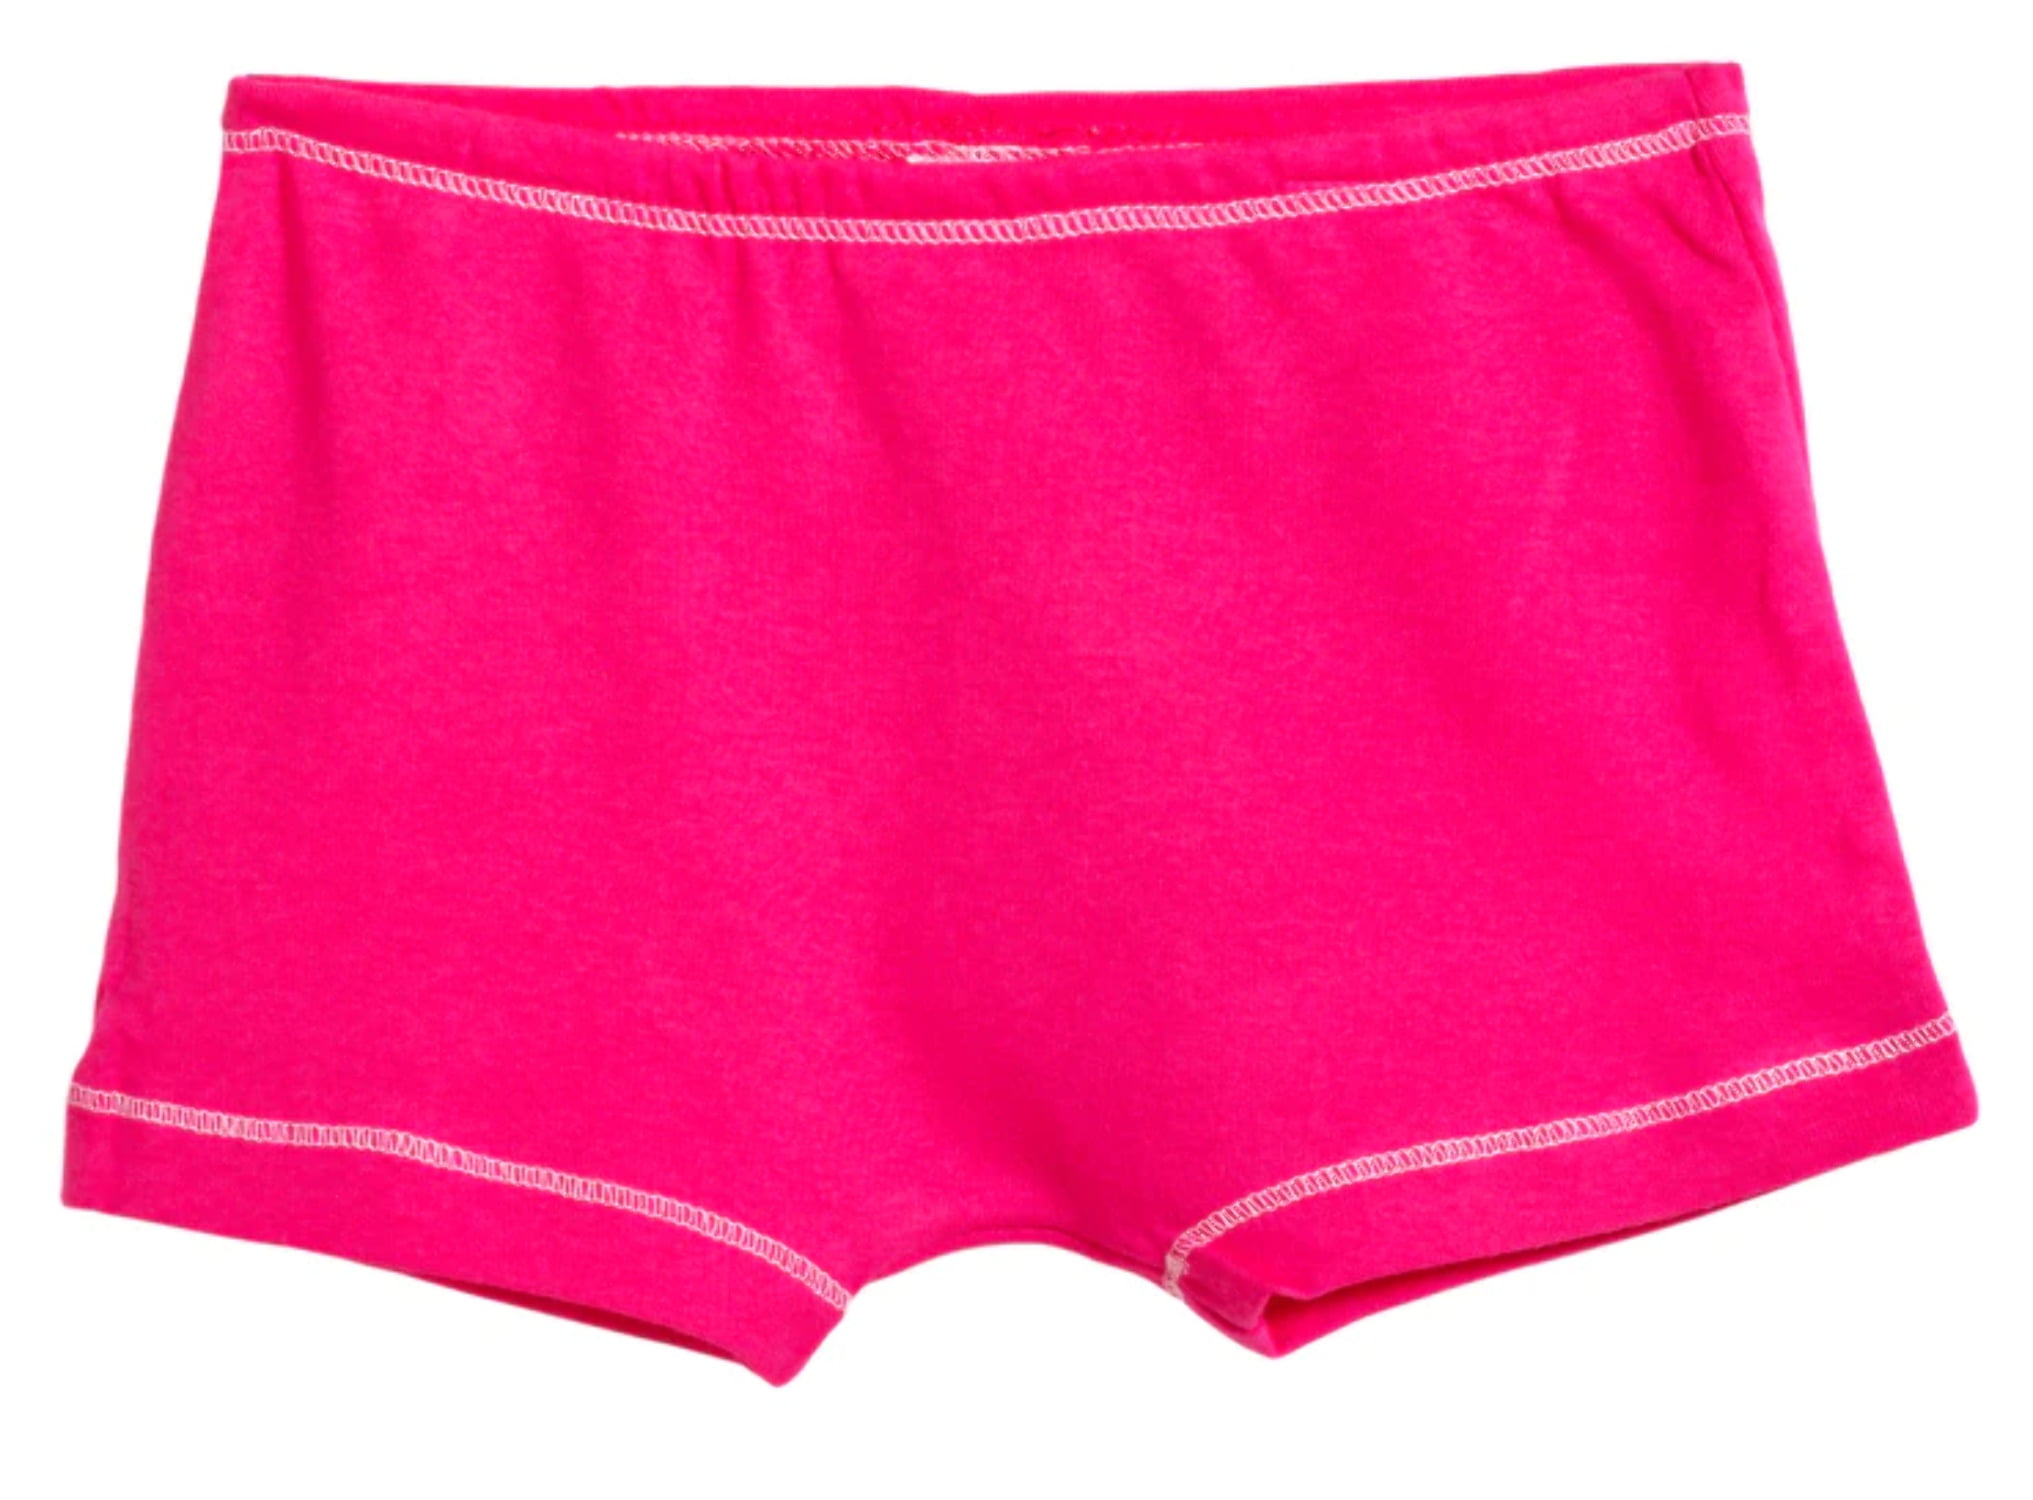 WIBACKER 3 Pack Girls 100% Cotton Boyshorts Panties 2-12T Kids Cartoon  Boxer Shorts Underwear, Random Color